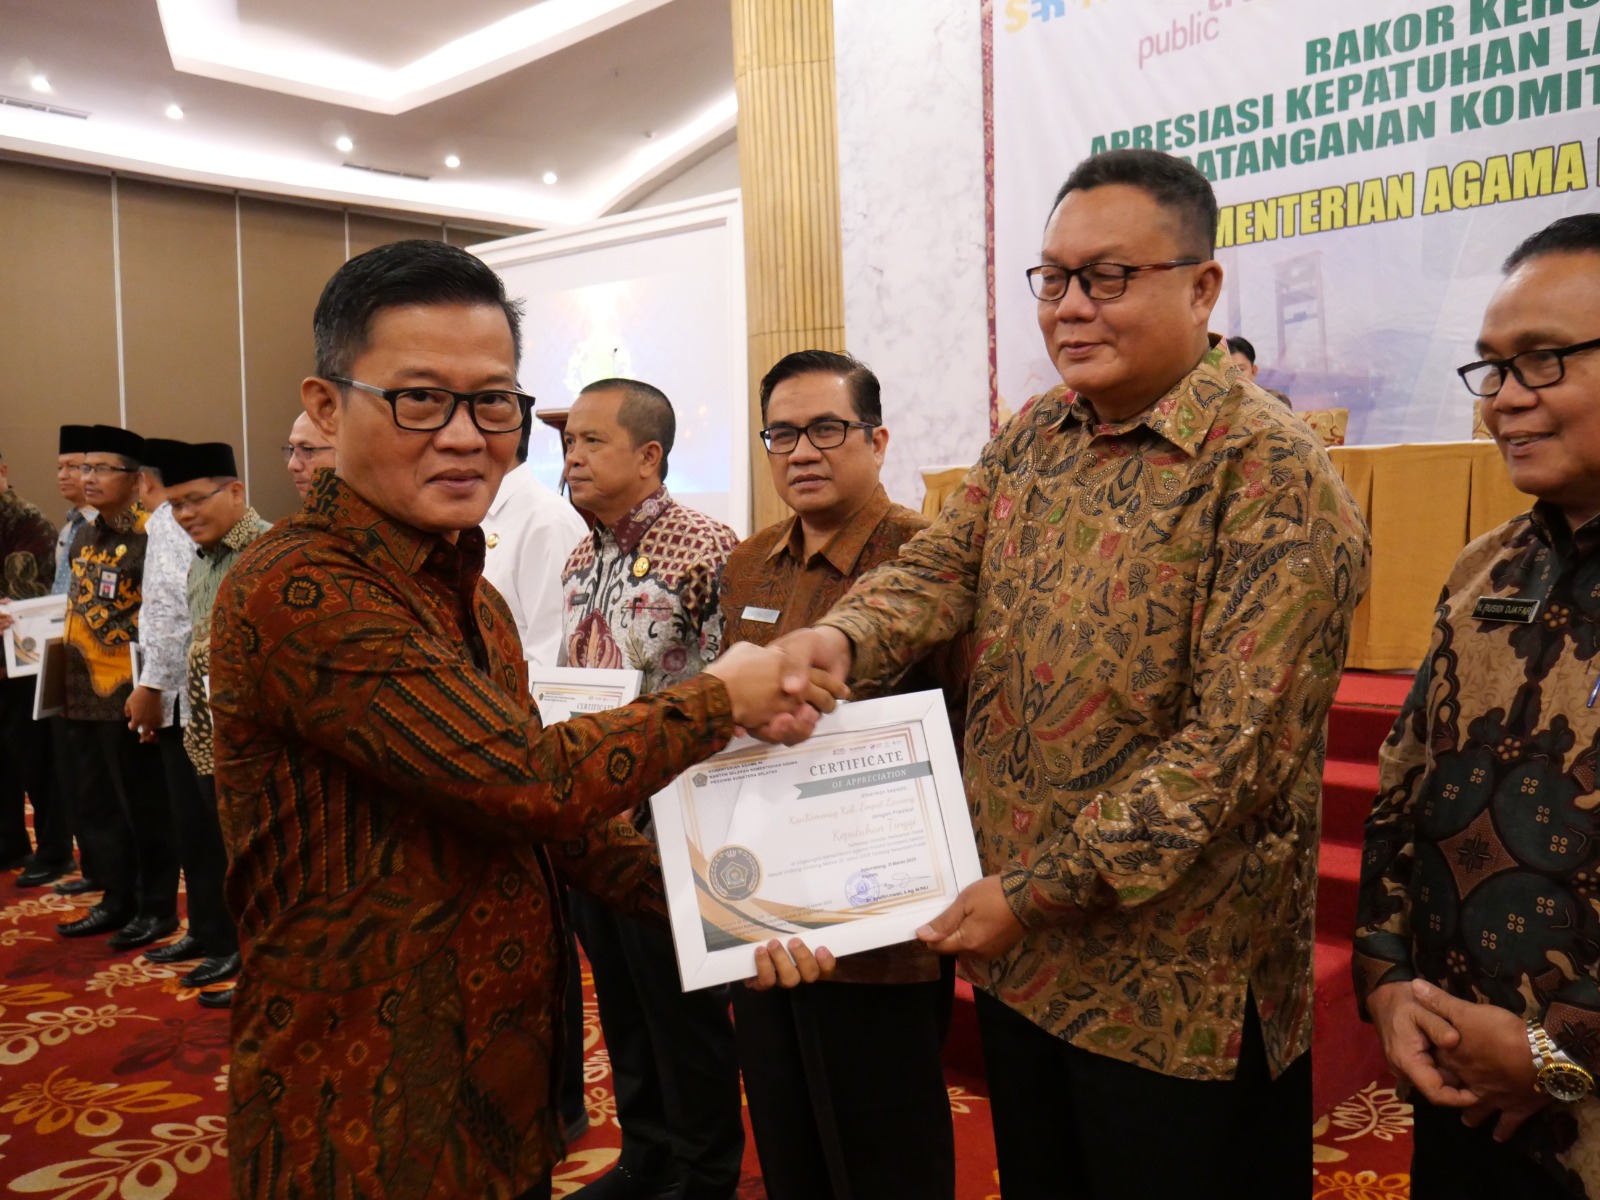 Kemenag Empat Lawang Terima Penghargaan dari Kakanwil Provinsi Sumatera Selatan